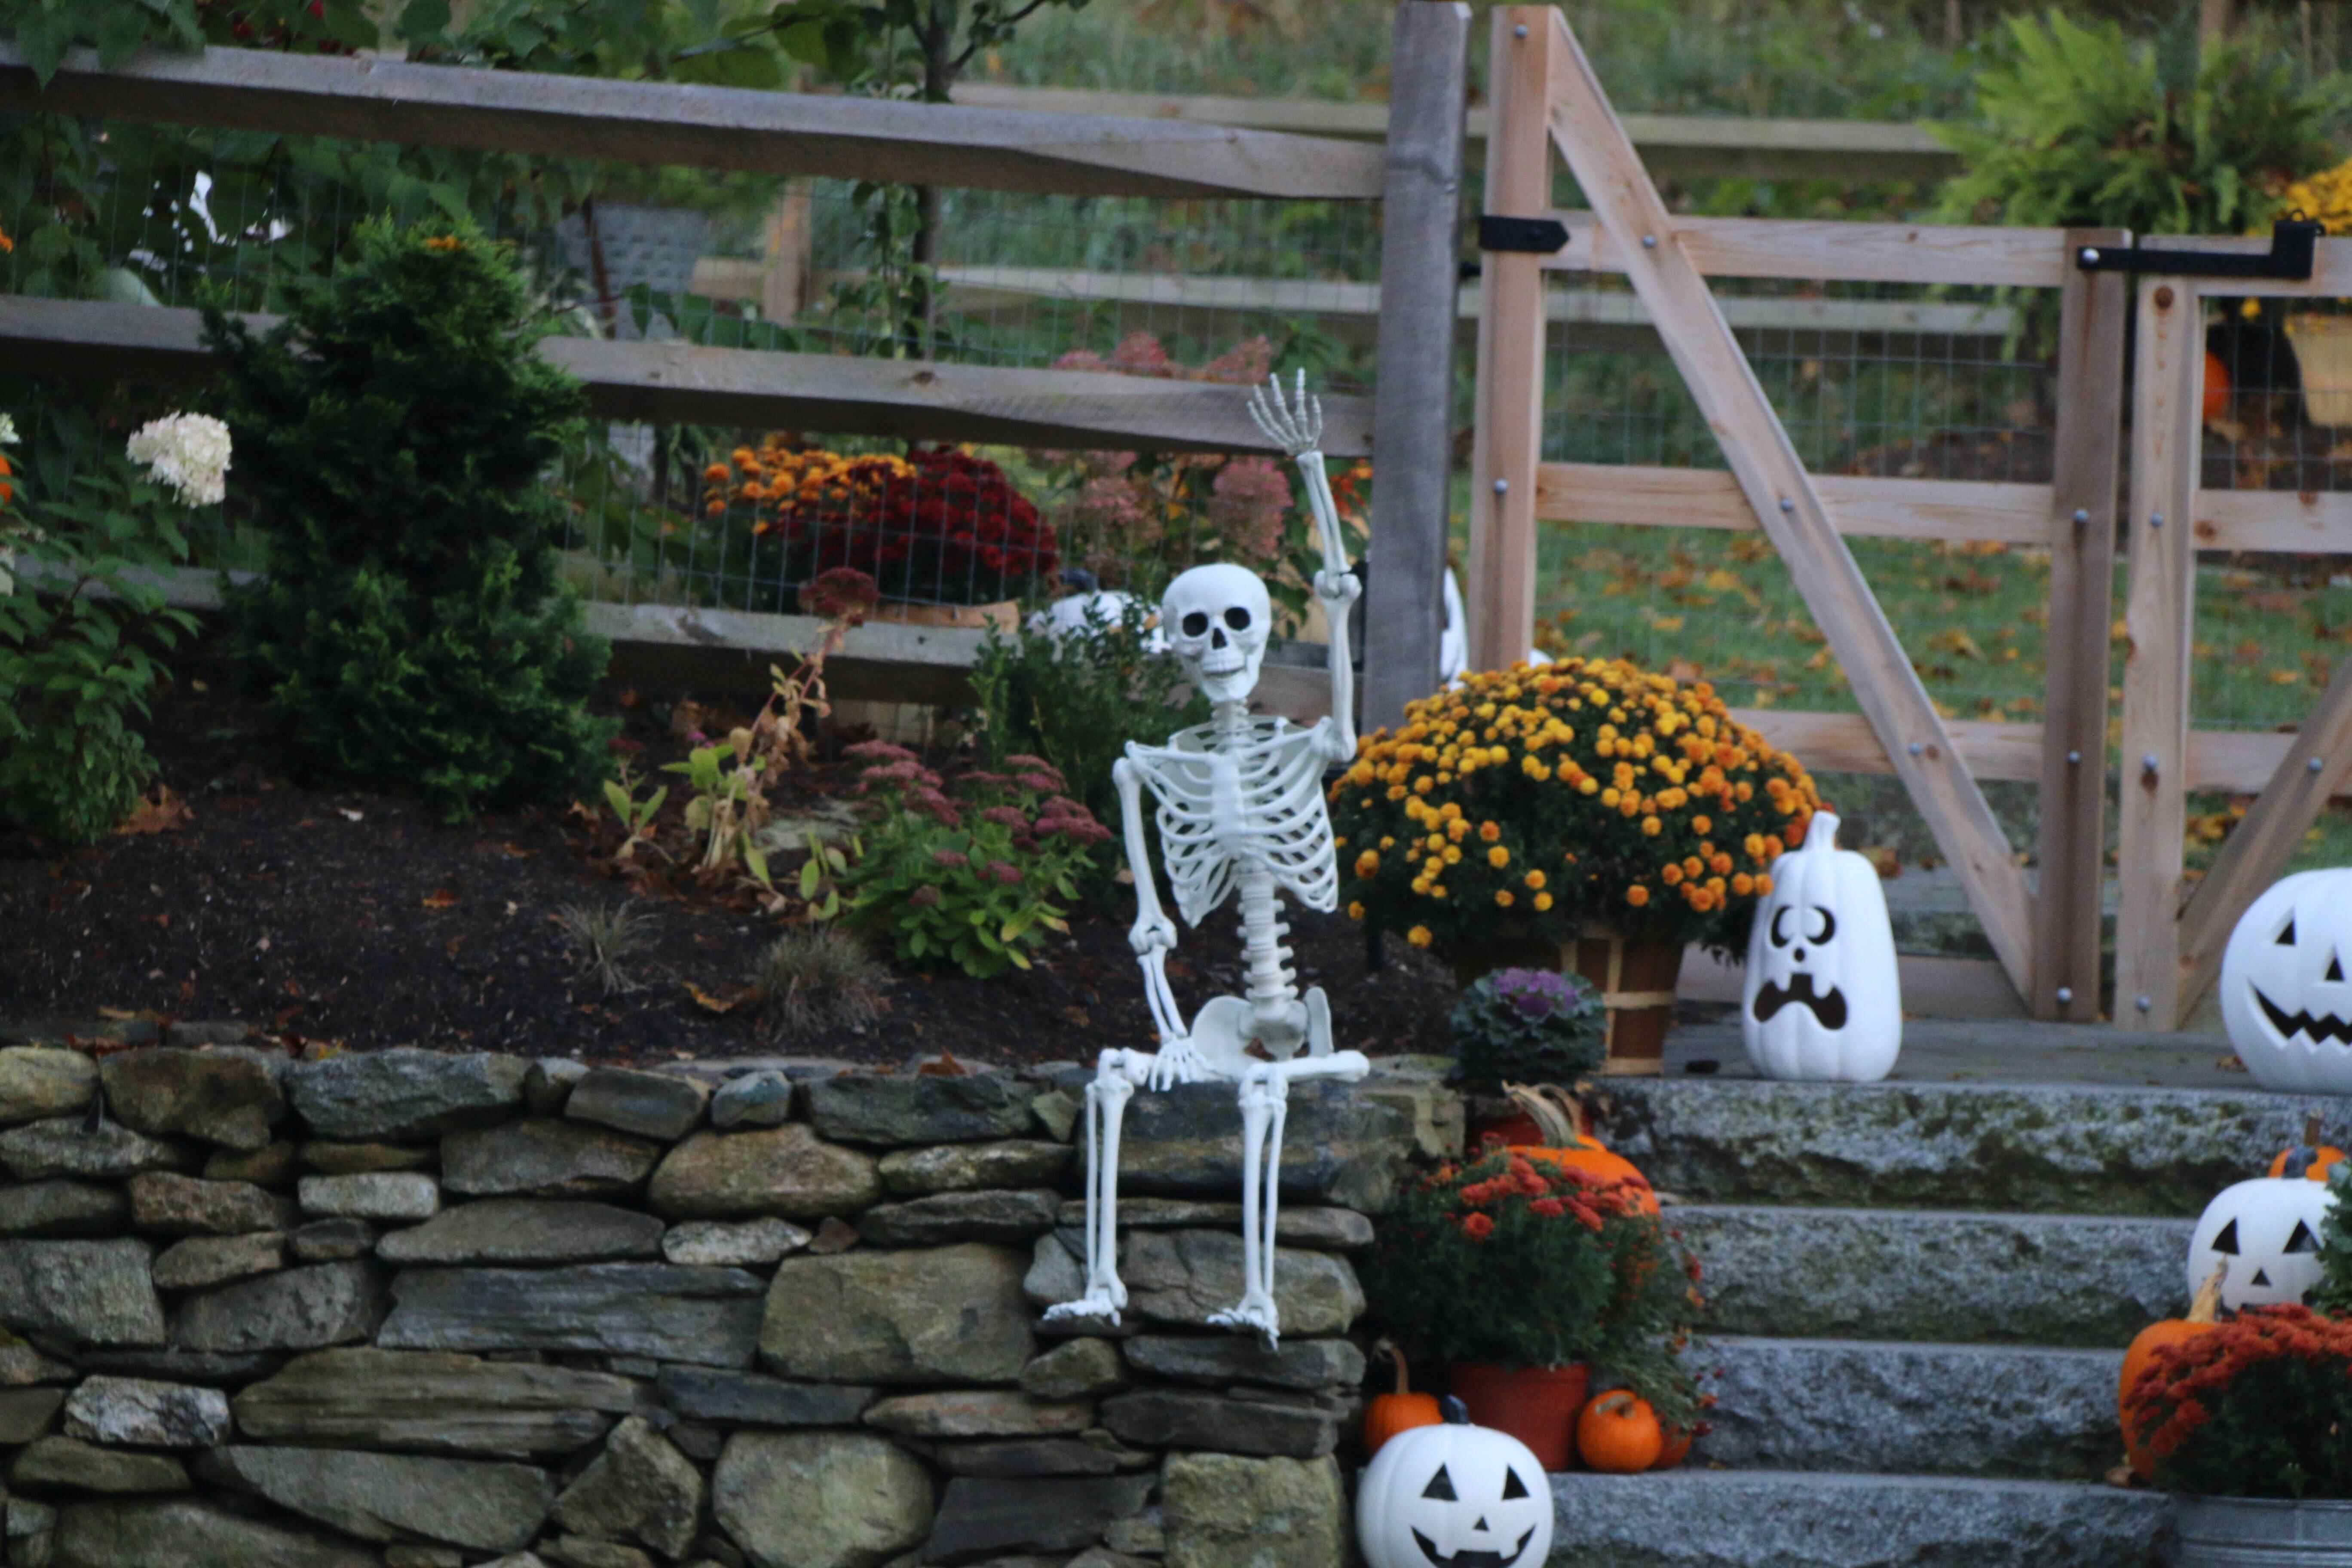 Skeleton waving hi on a ledge with Halloween décor around